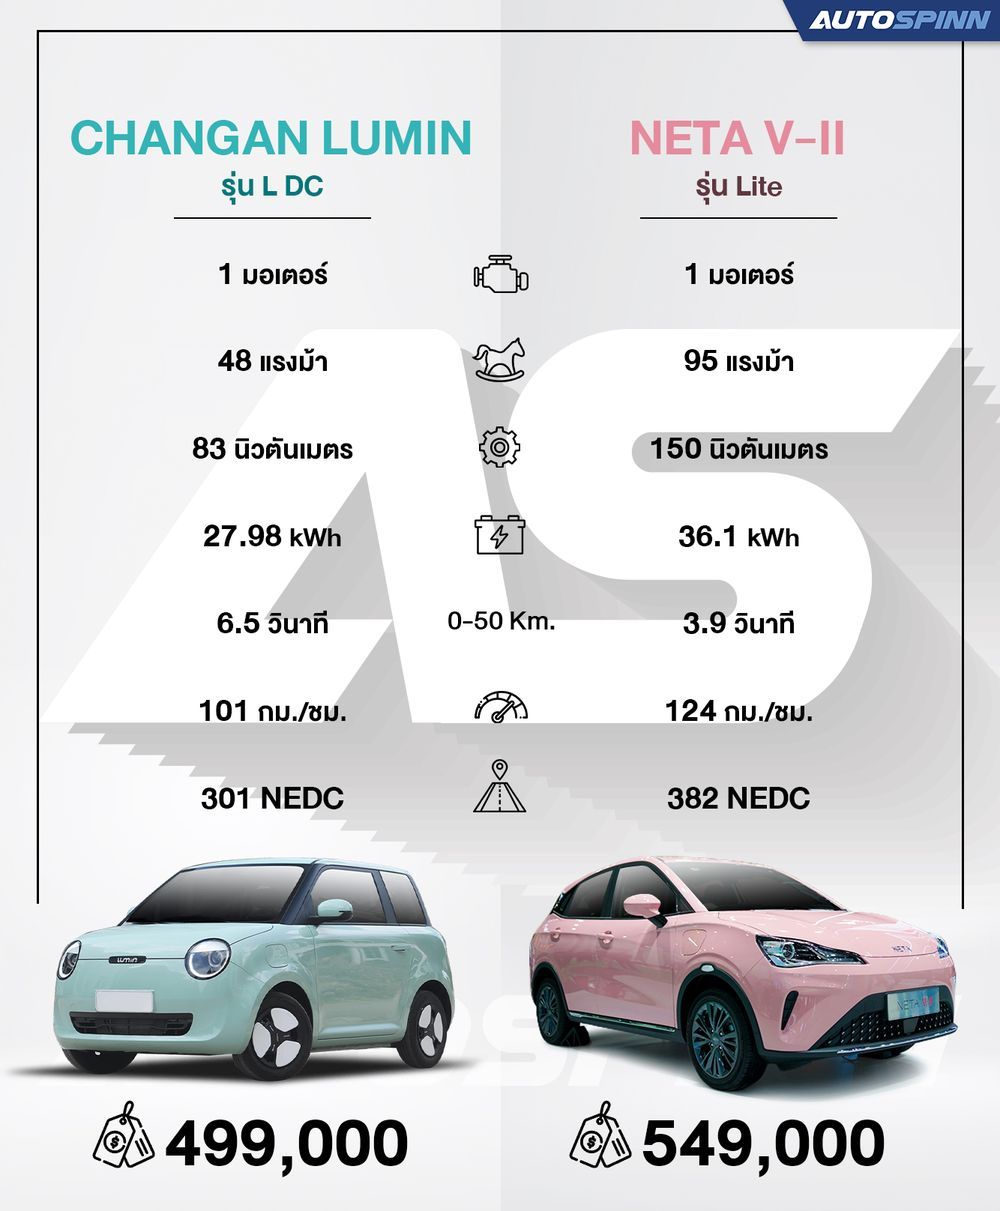 CHANGAN Lumin L DC VS NETA V-II INFO